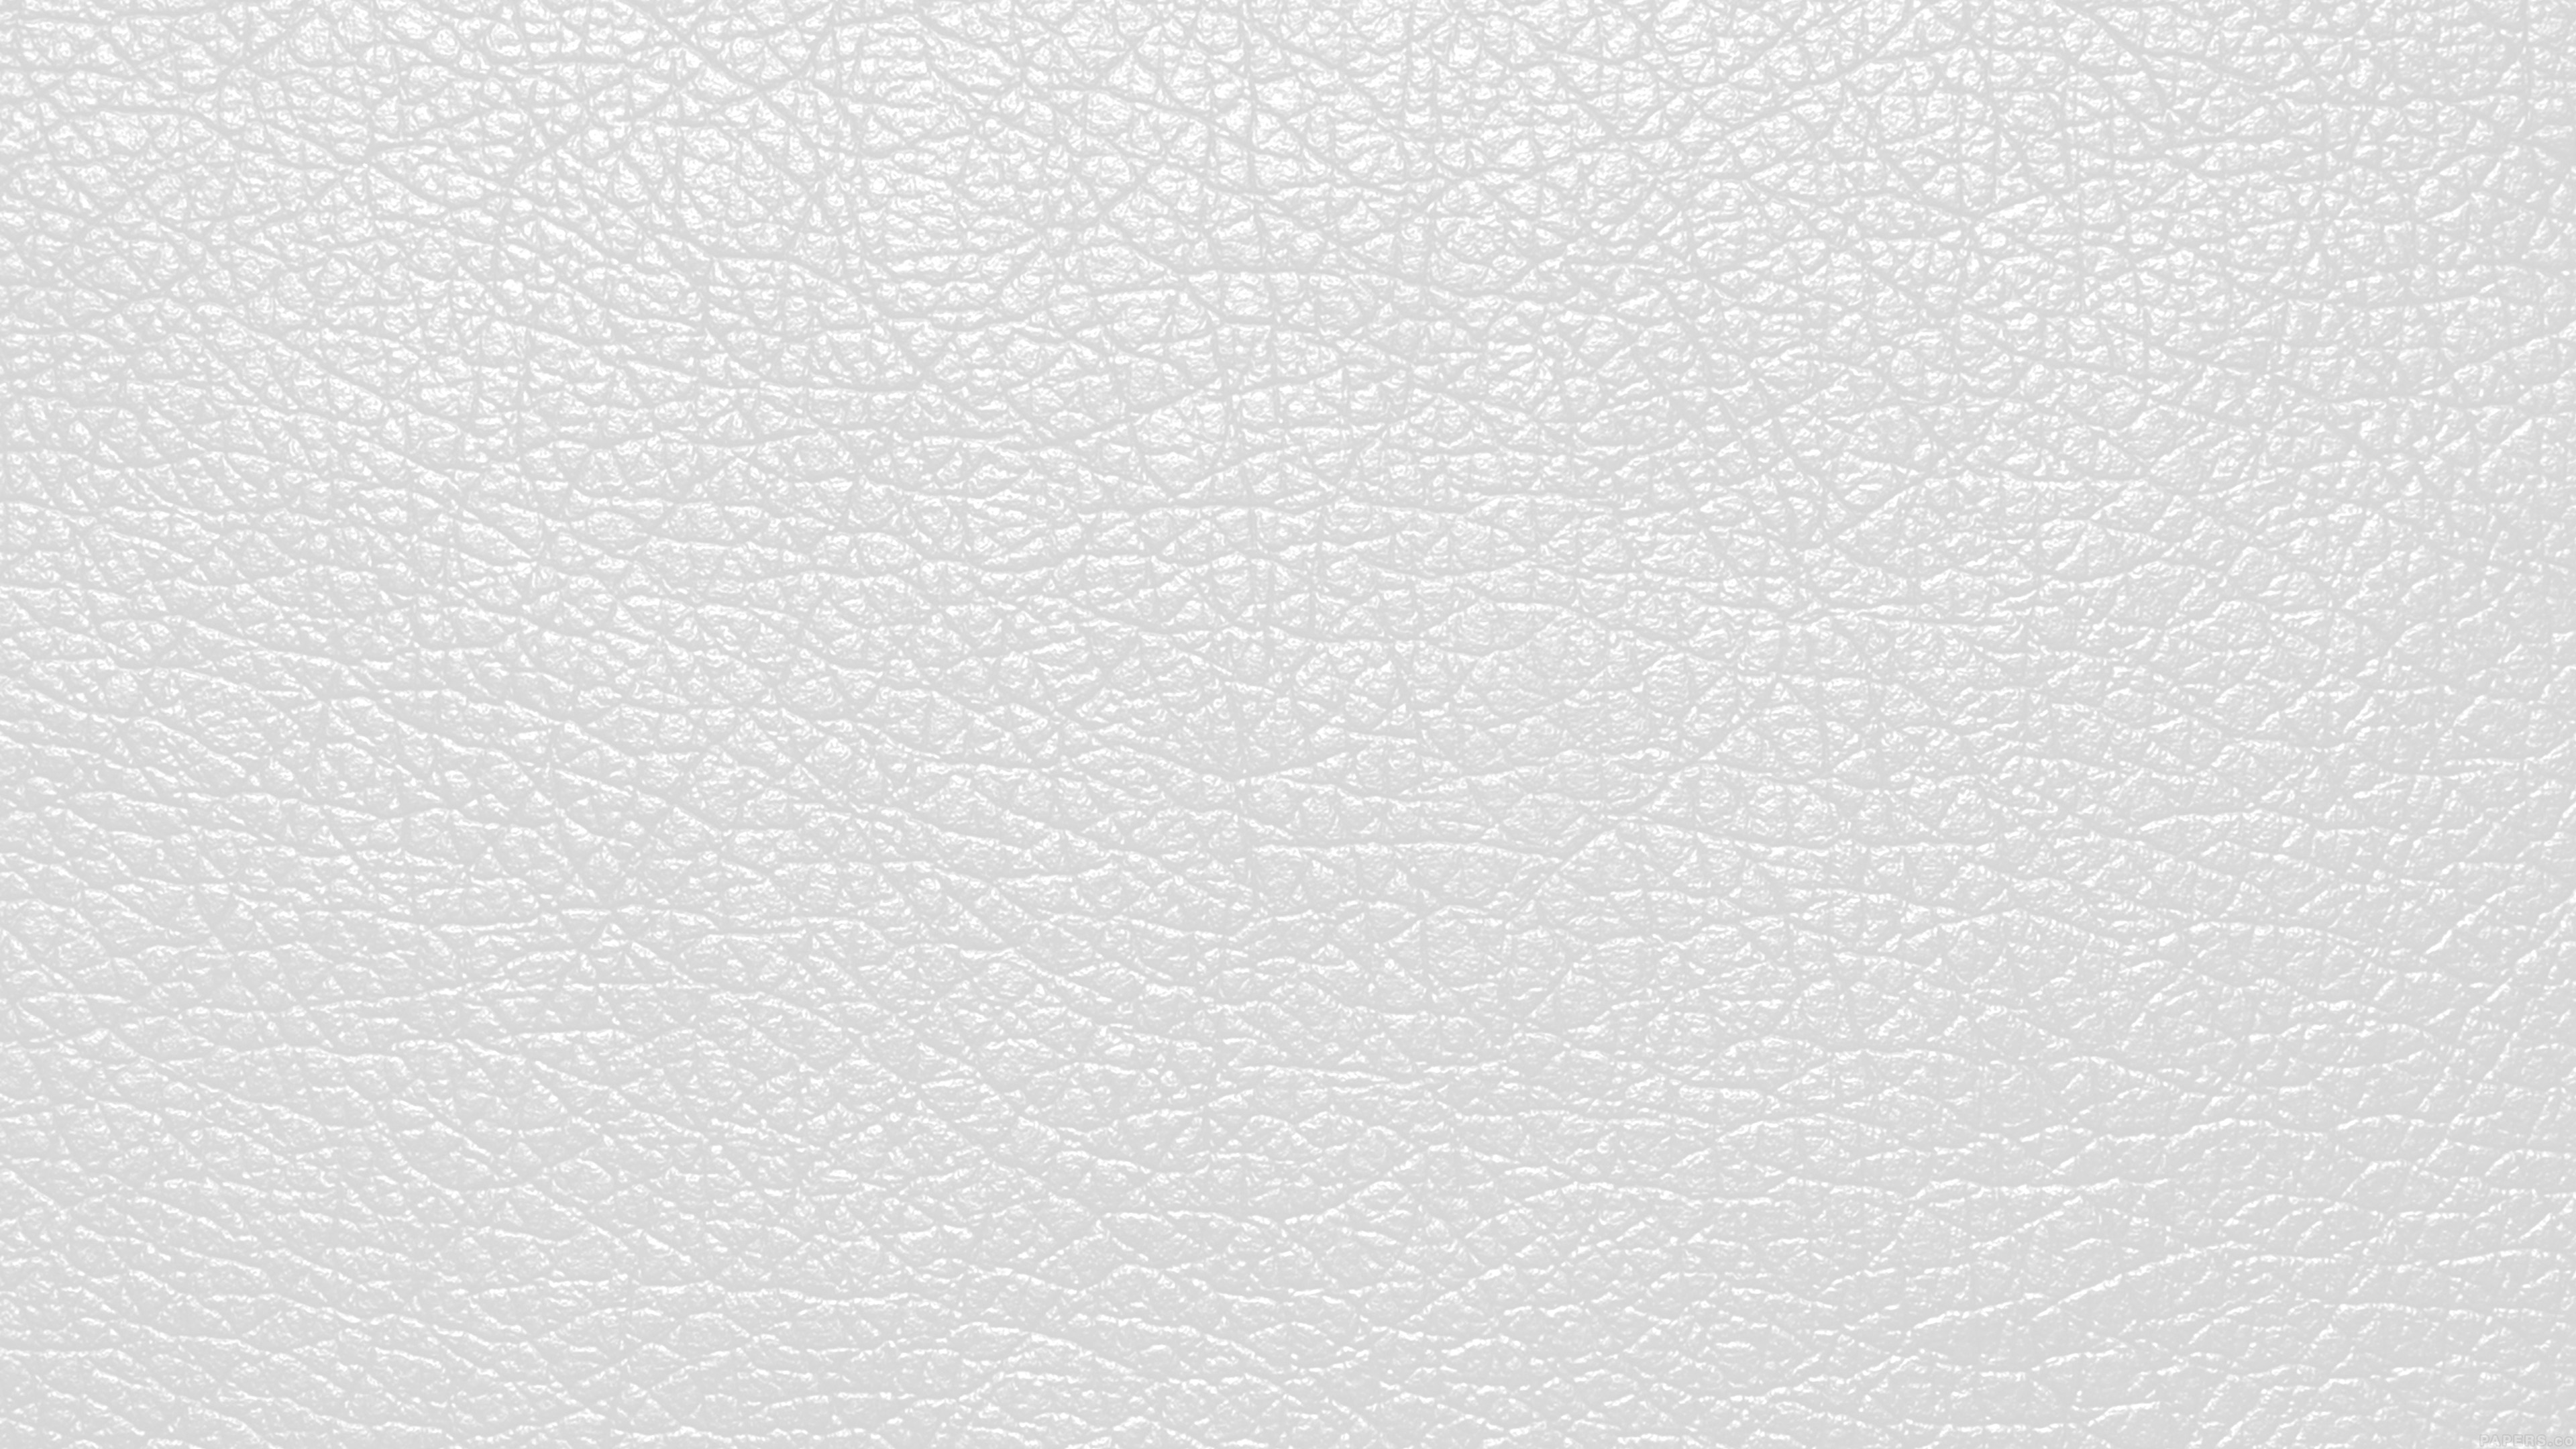 wallpaper for desktop, laptop. texture skin white leather pattern